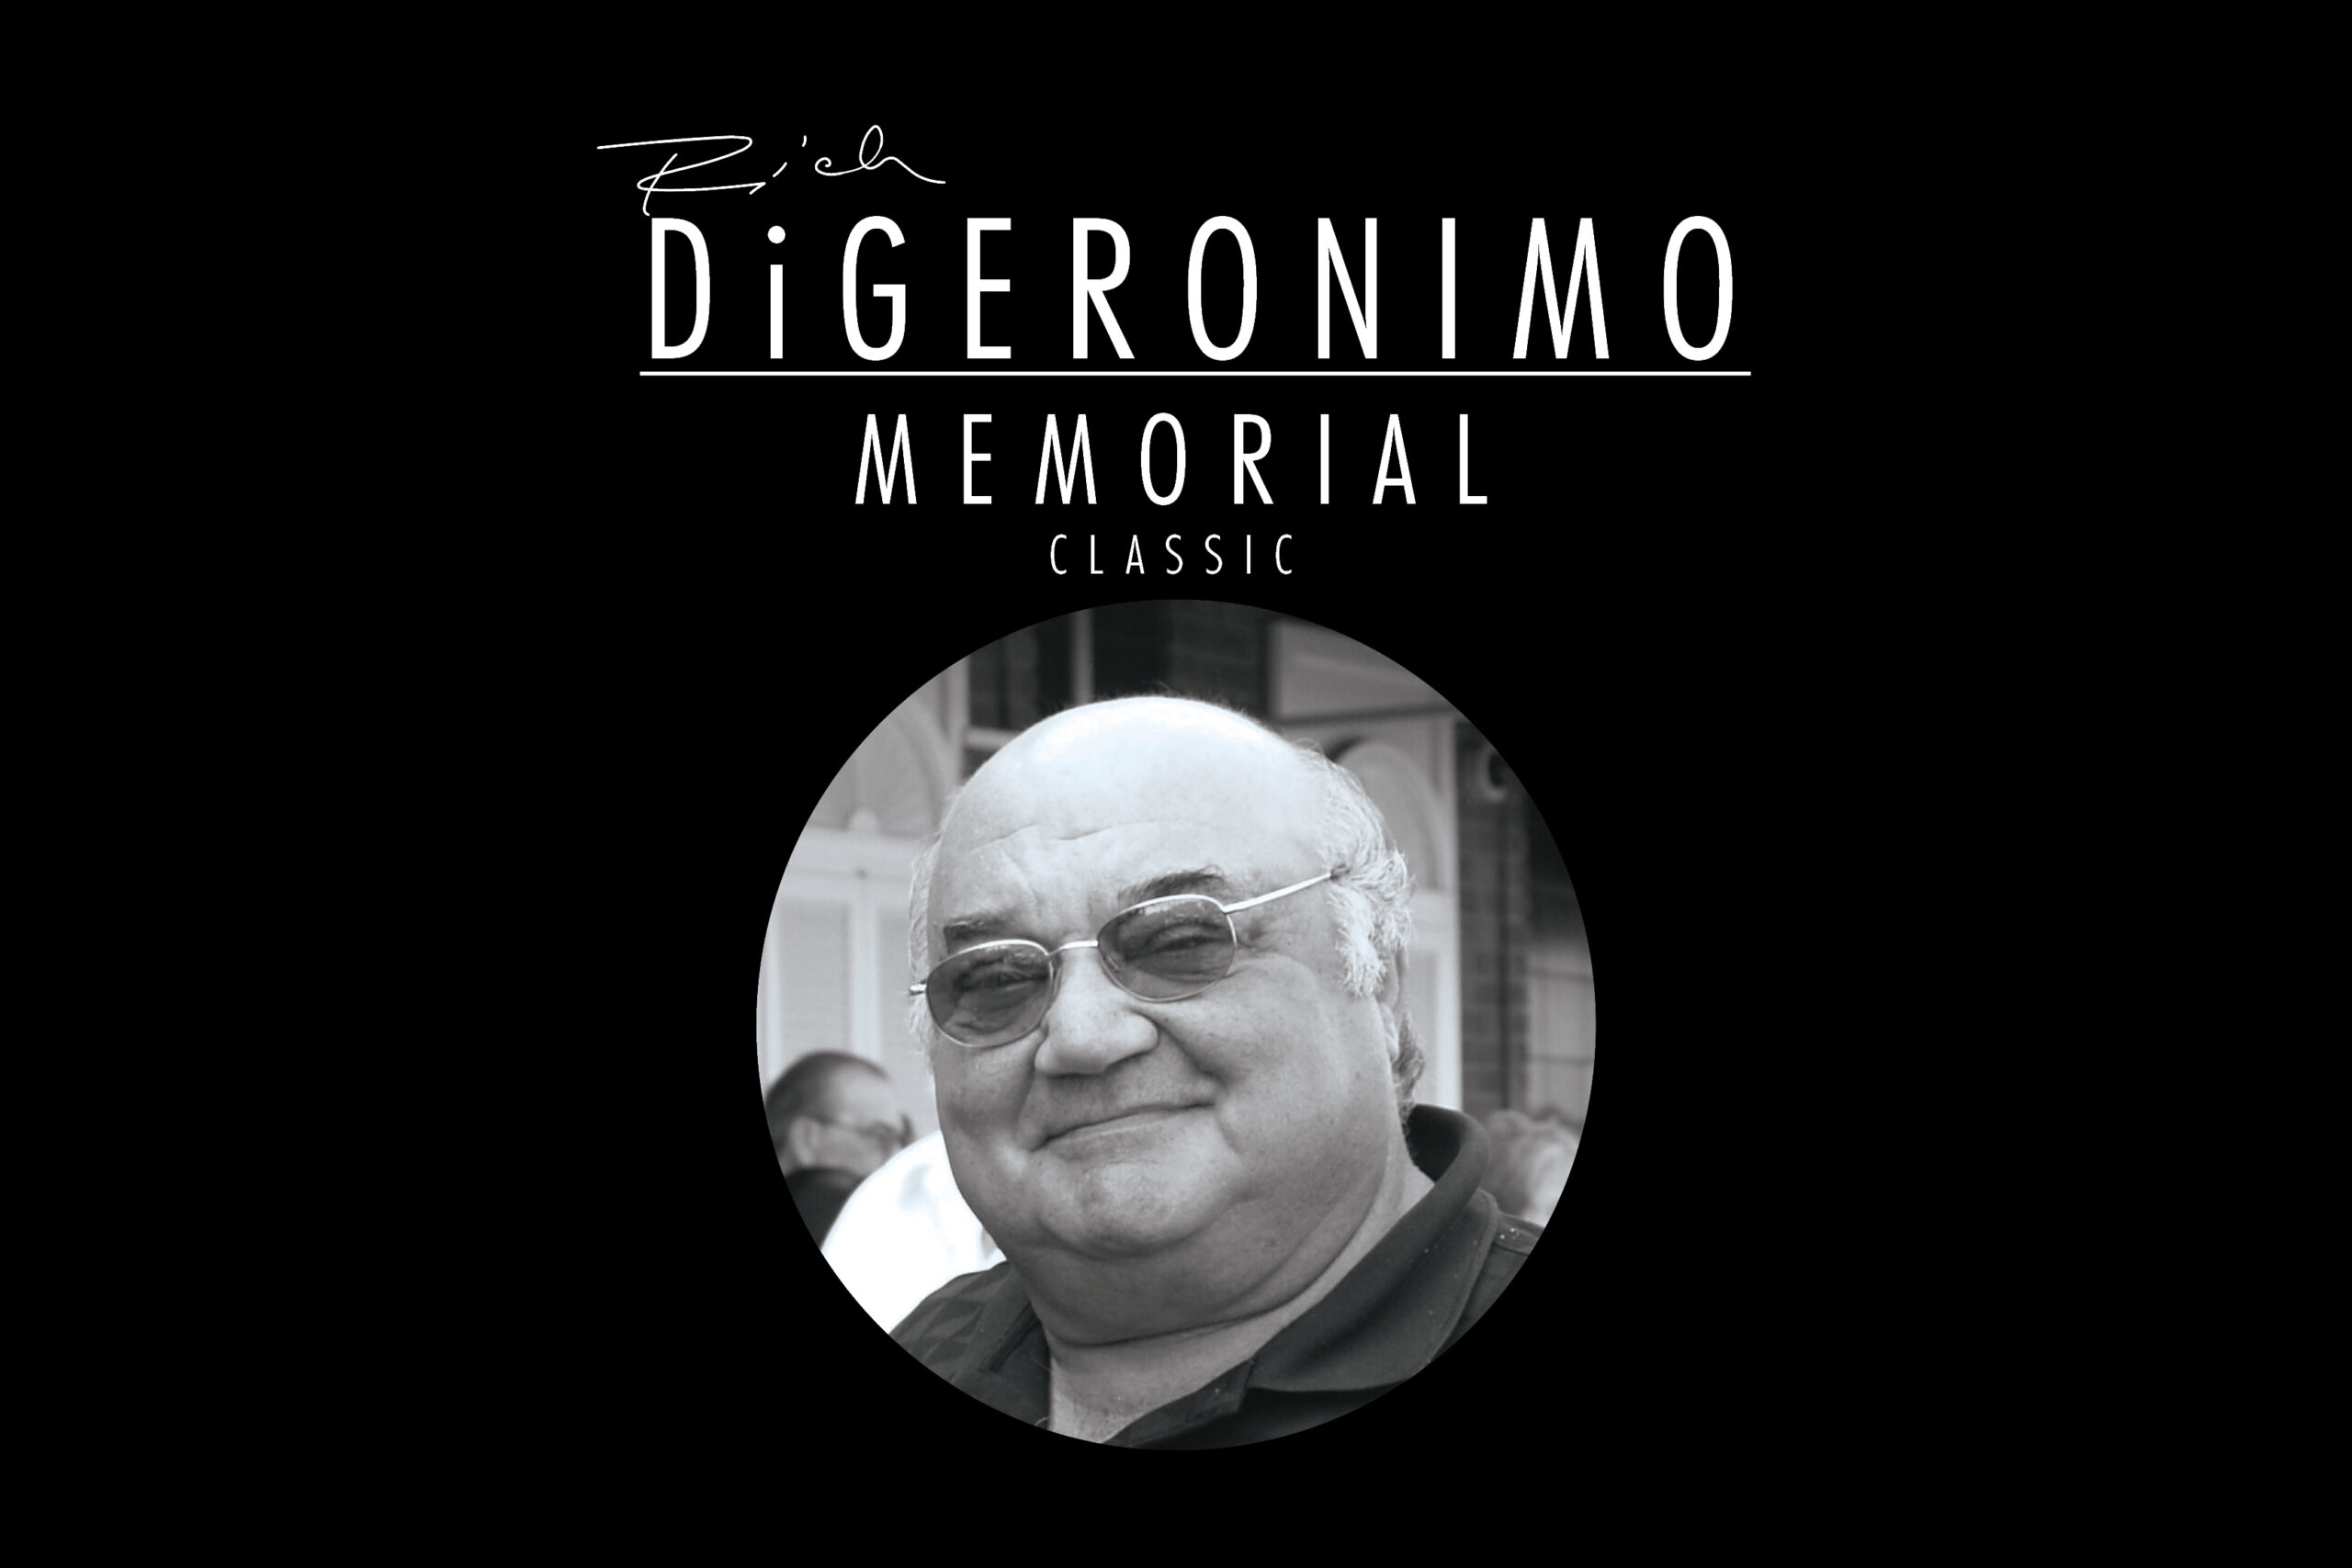 Rich DiGeronimo Memorial Classic